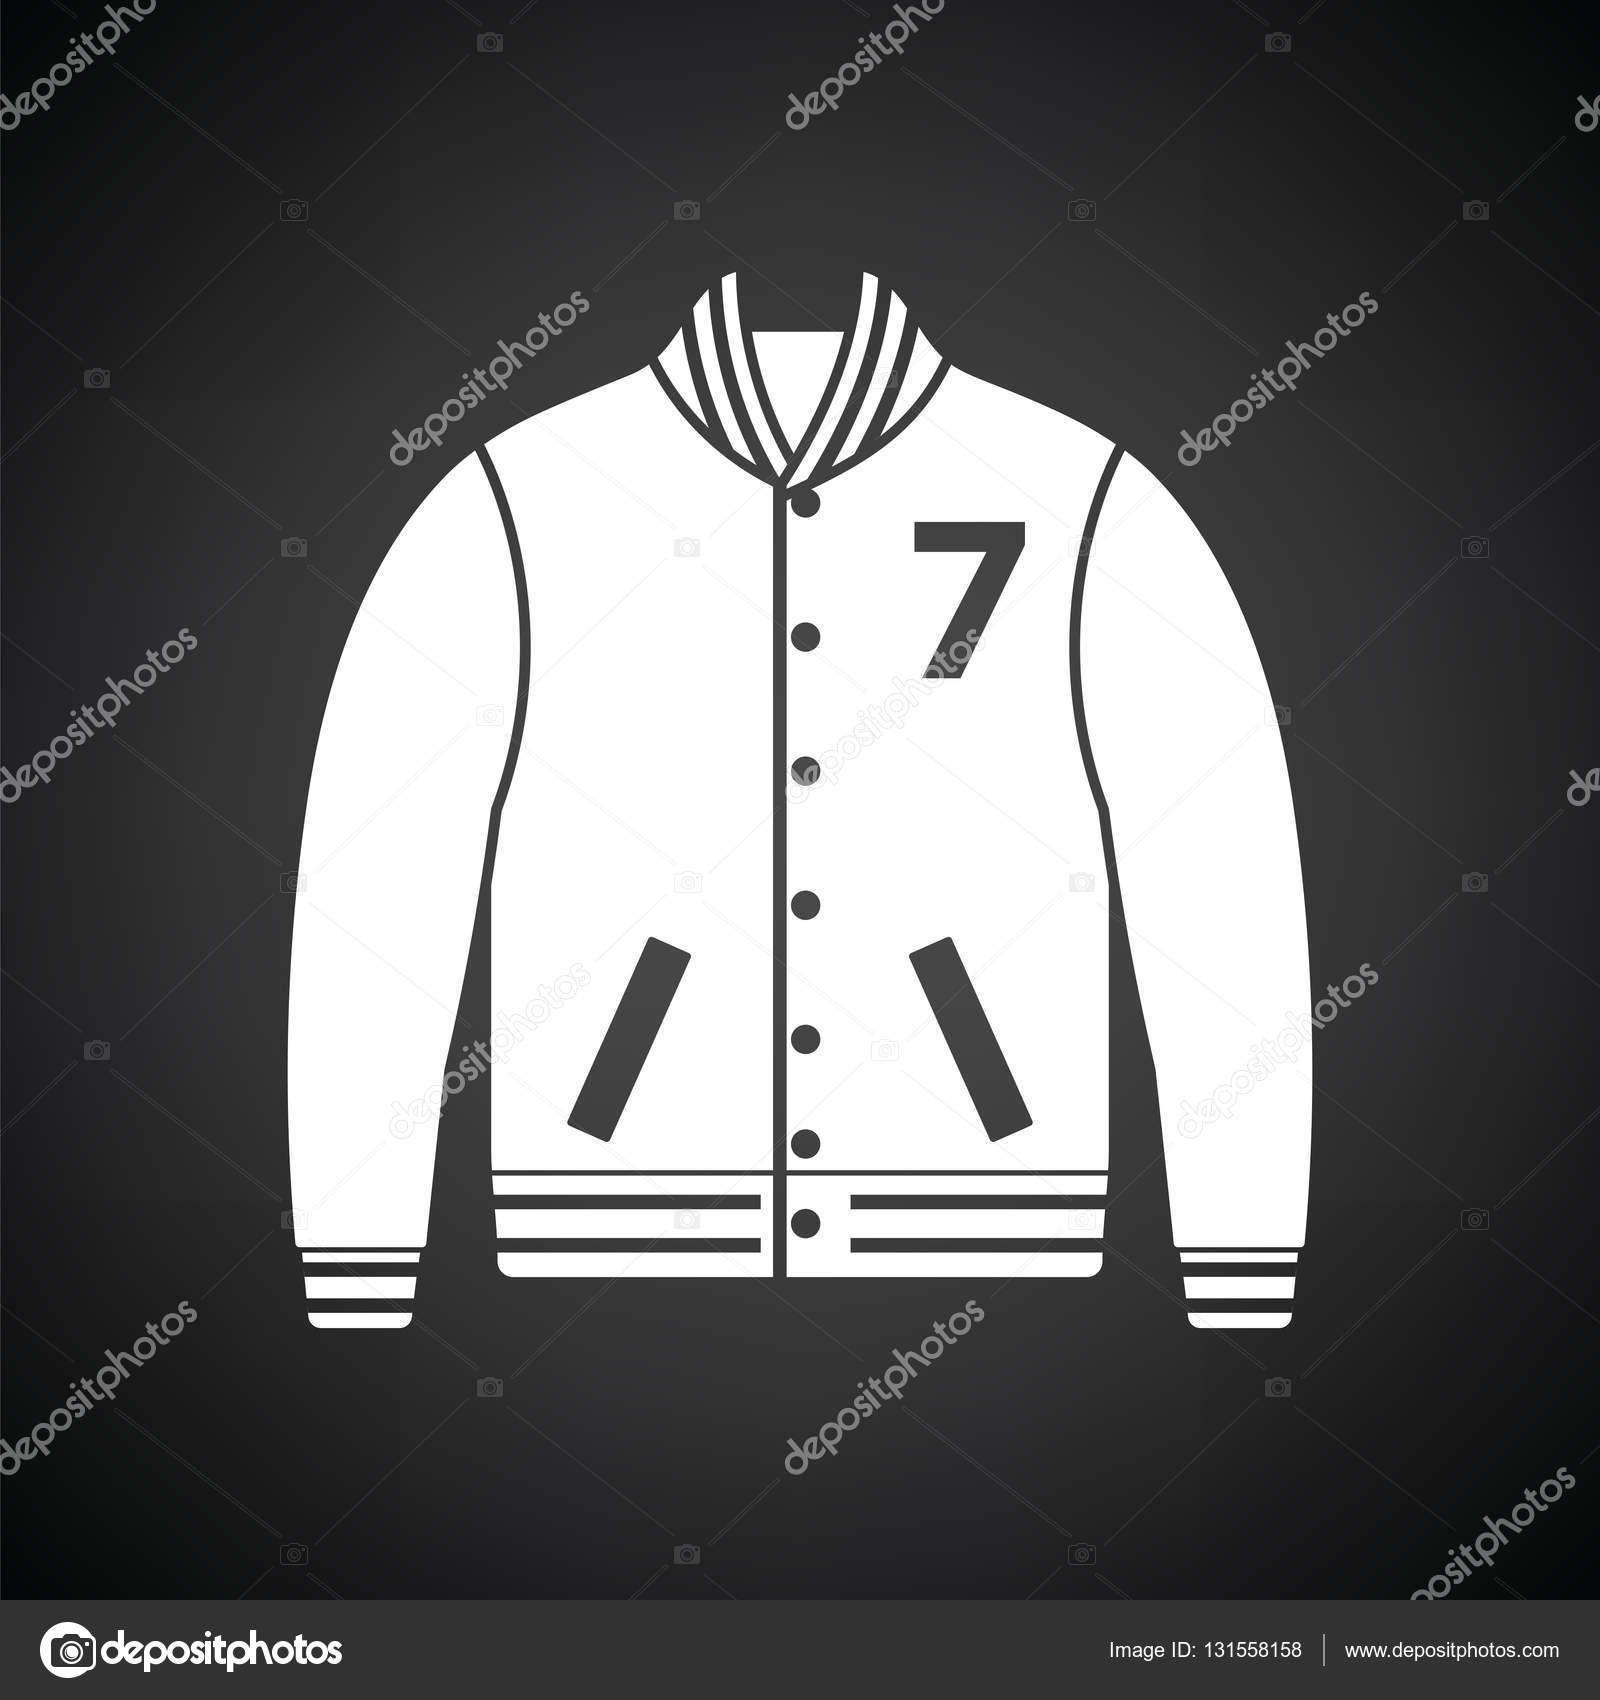 Download 473 Varsity Jacket Vector Images Free Royalty Free Varsity Jacket Vectors Depositphotos